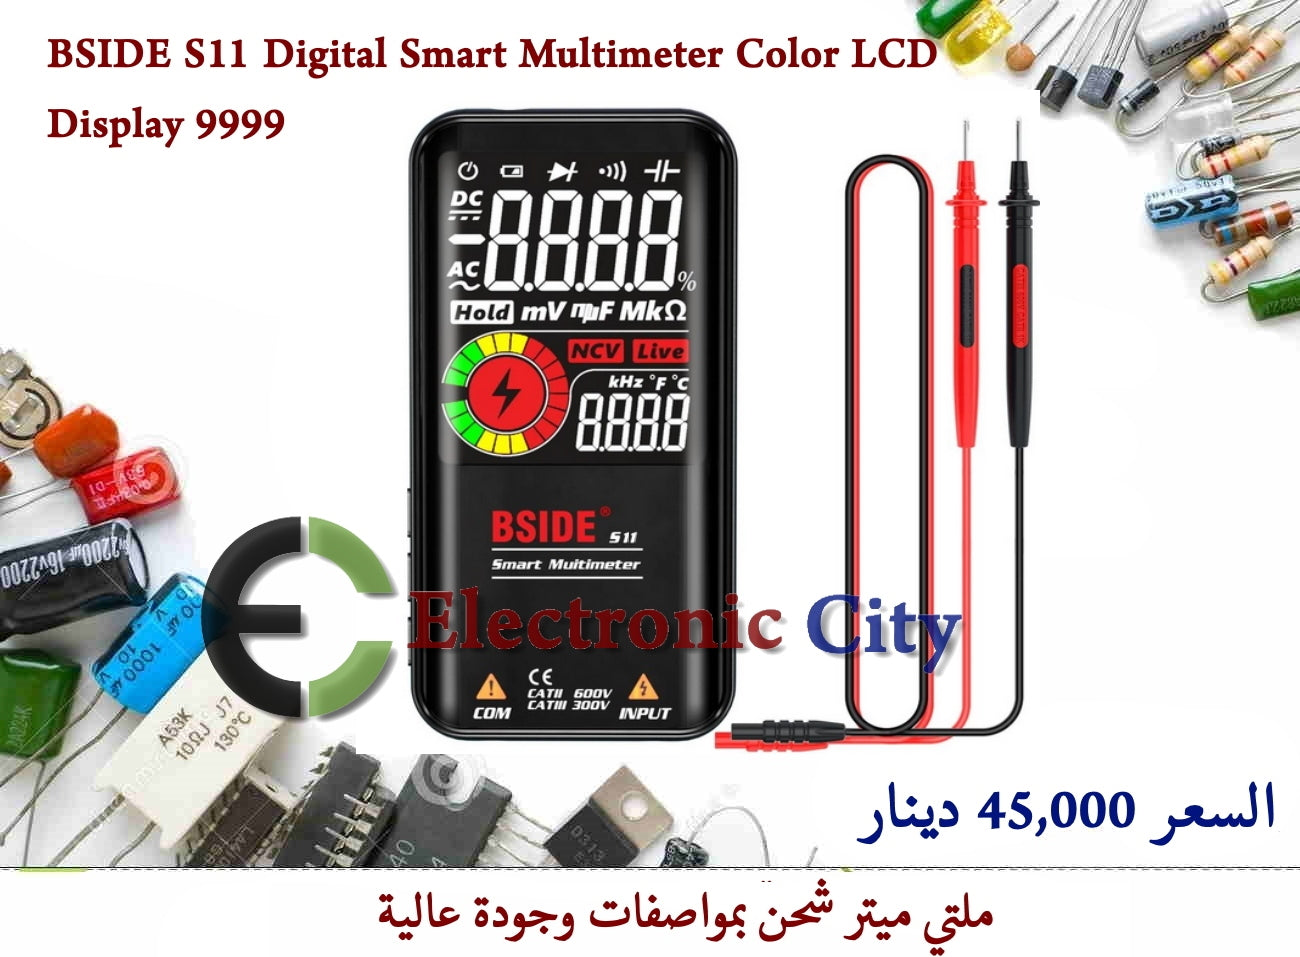 BSIDE S11 Digital Smart Multimeter Color LCD Display 9999